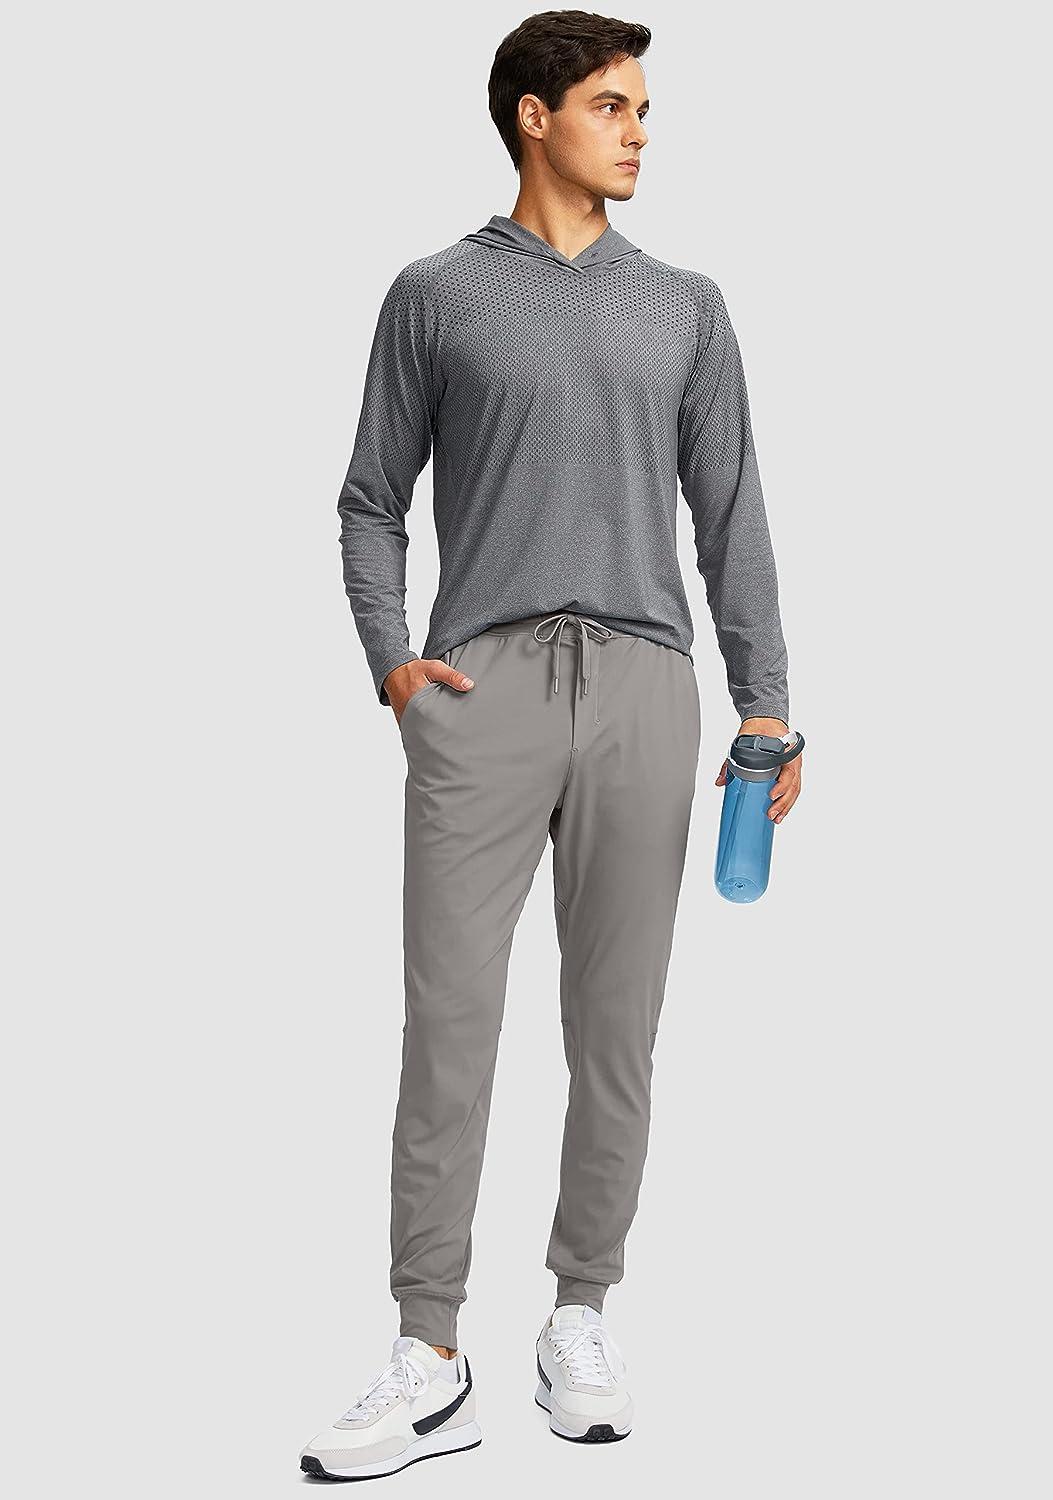 Pudolla Men's Joggers Sweatpants with 3 Zipper Pockets Workout